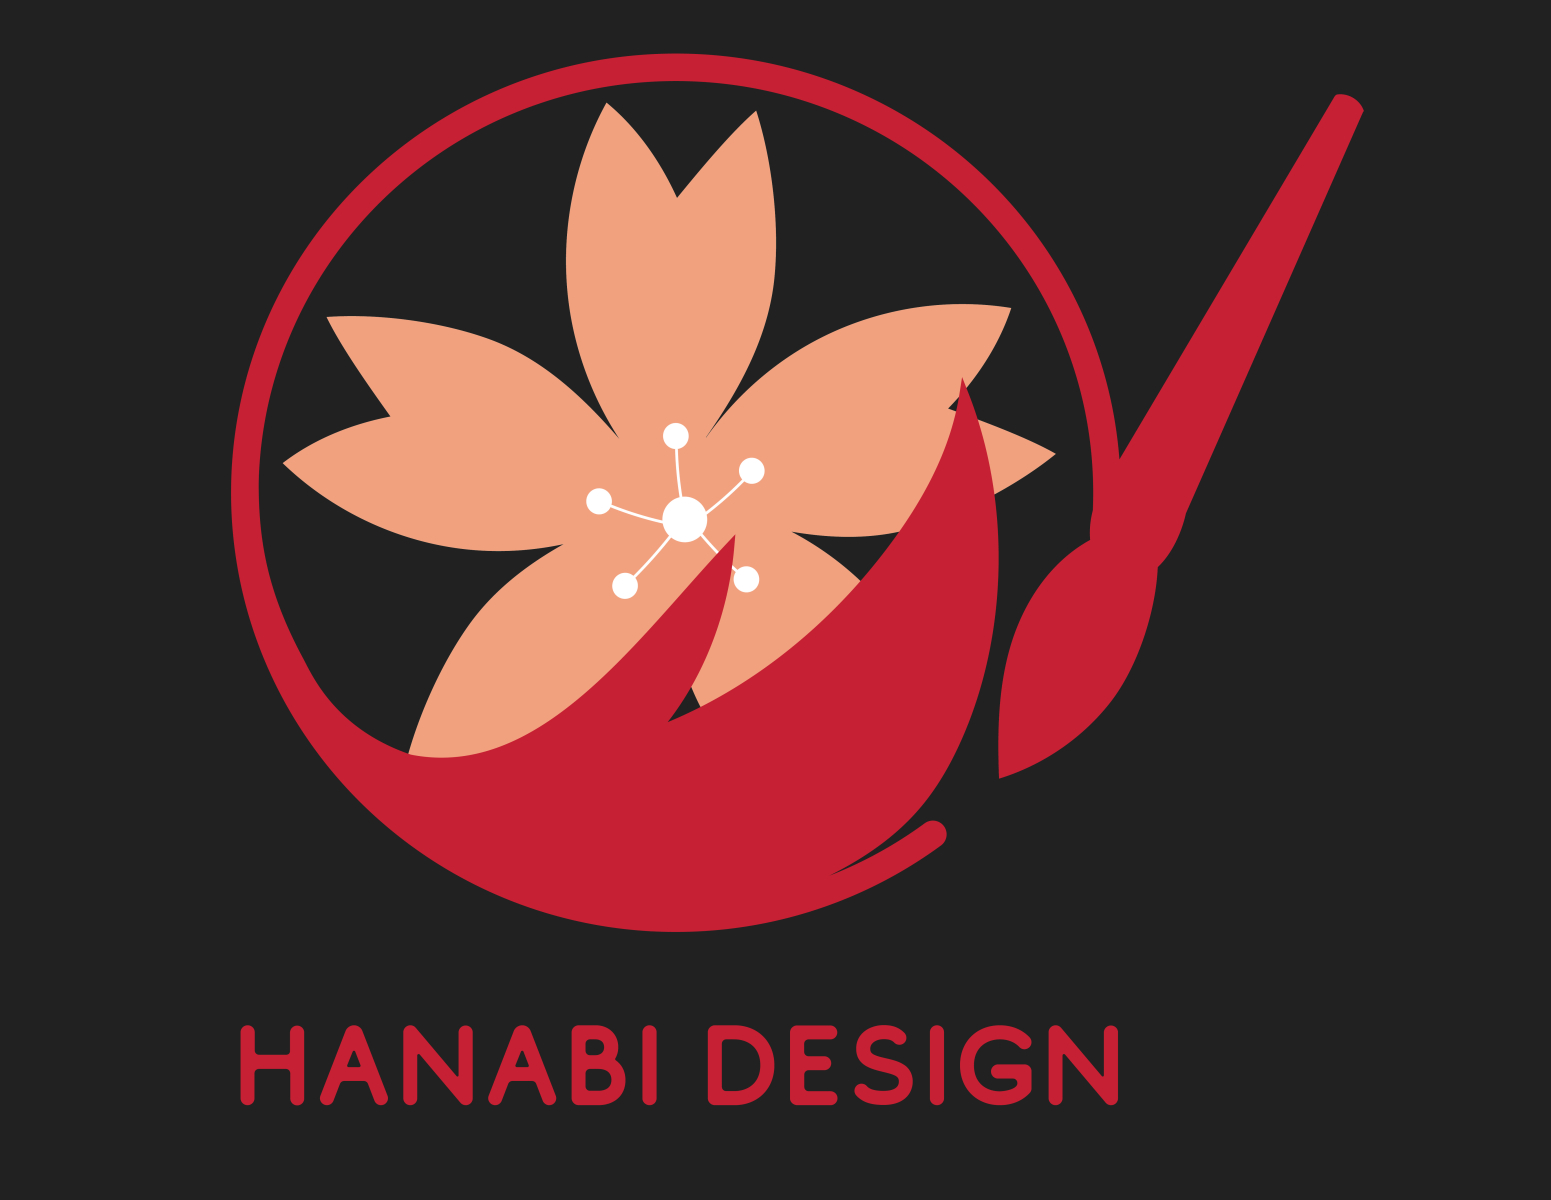 Hanabi Design Logo By Marion Gajic On Dribbble